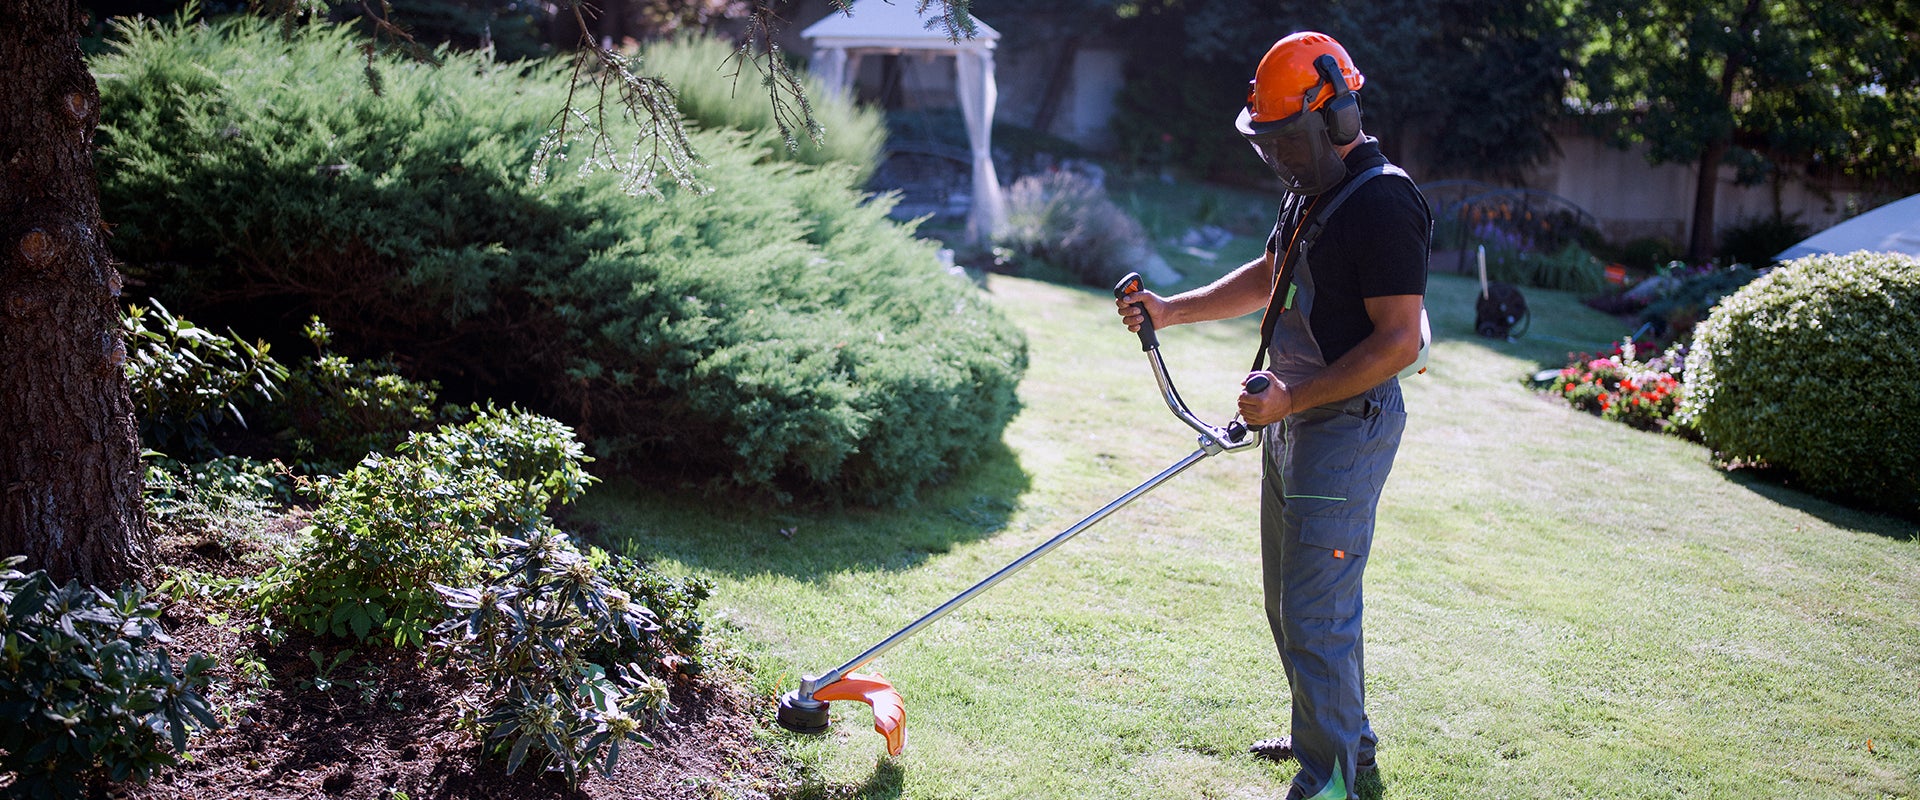 man using edger to trim lawn